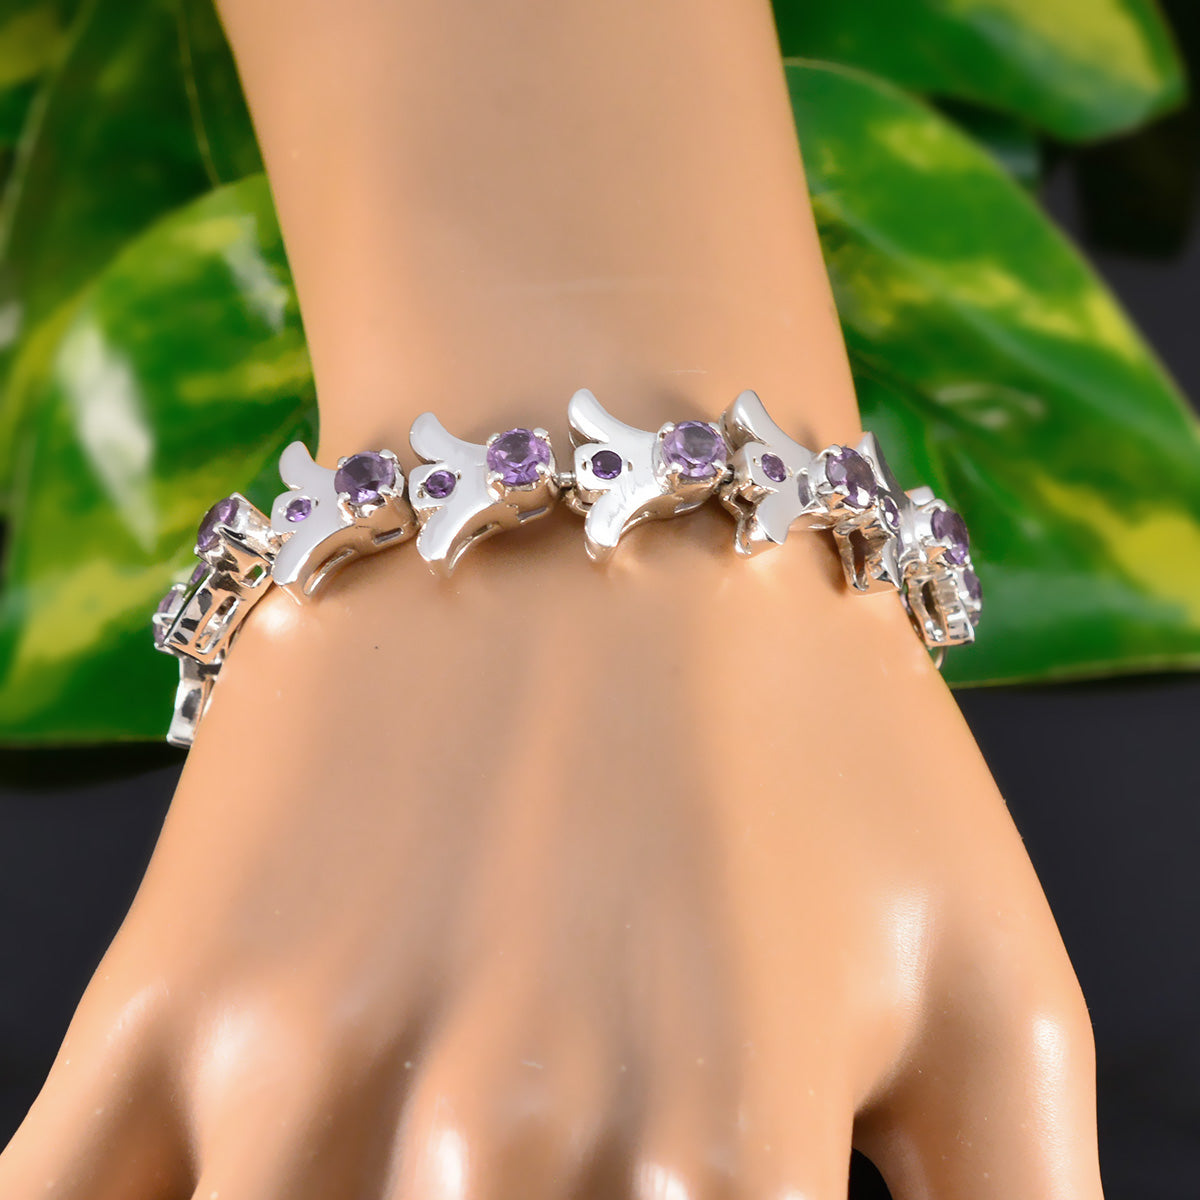 Riyo Gemstone 925 Sterling Silver Bracelet For Girls Amethyst Bracelet Prong Setting Bracelet with Fish Hook Link Bracelet L Size 6-8.5 Inch.